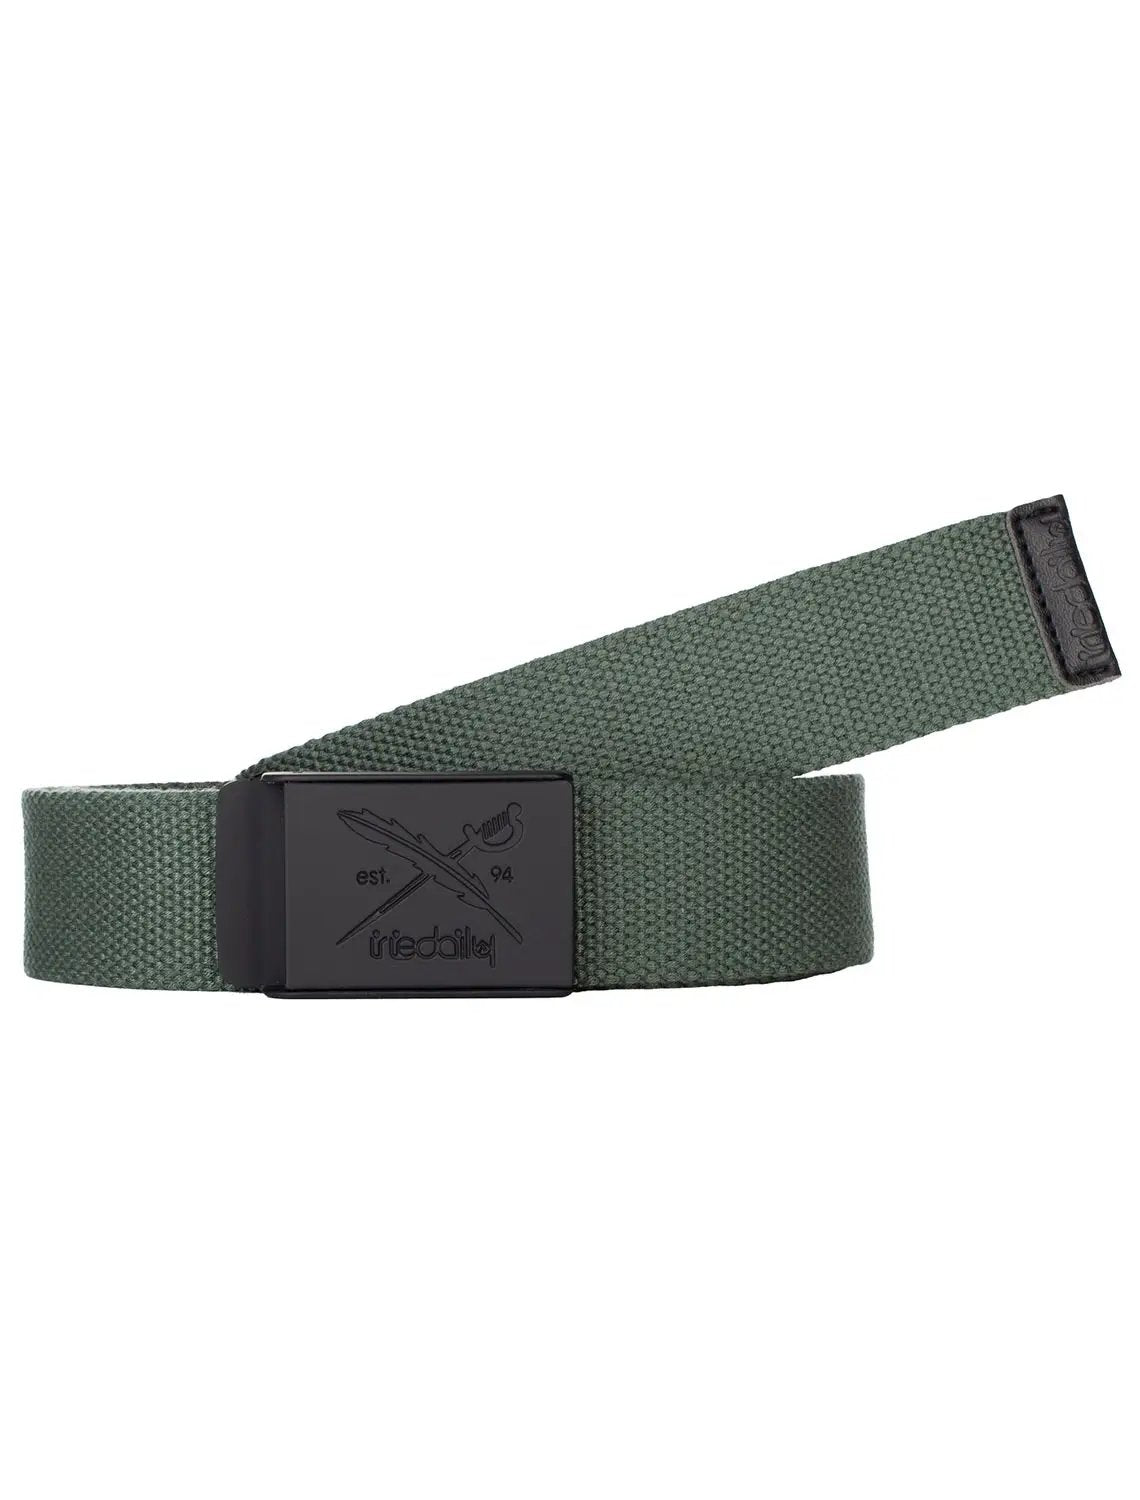 cinturón-hombre-iriedaily-verde